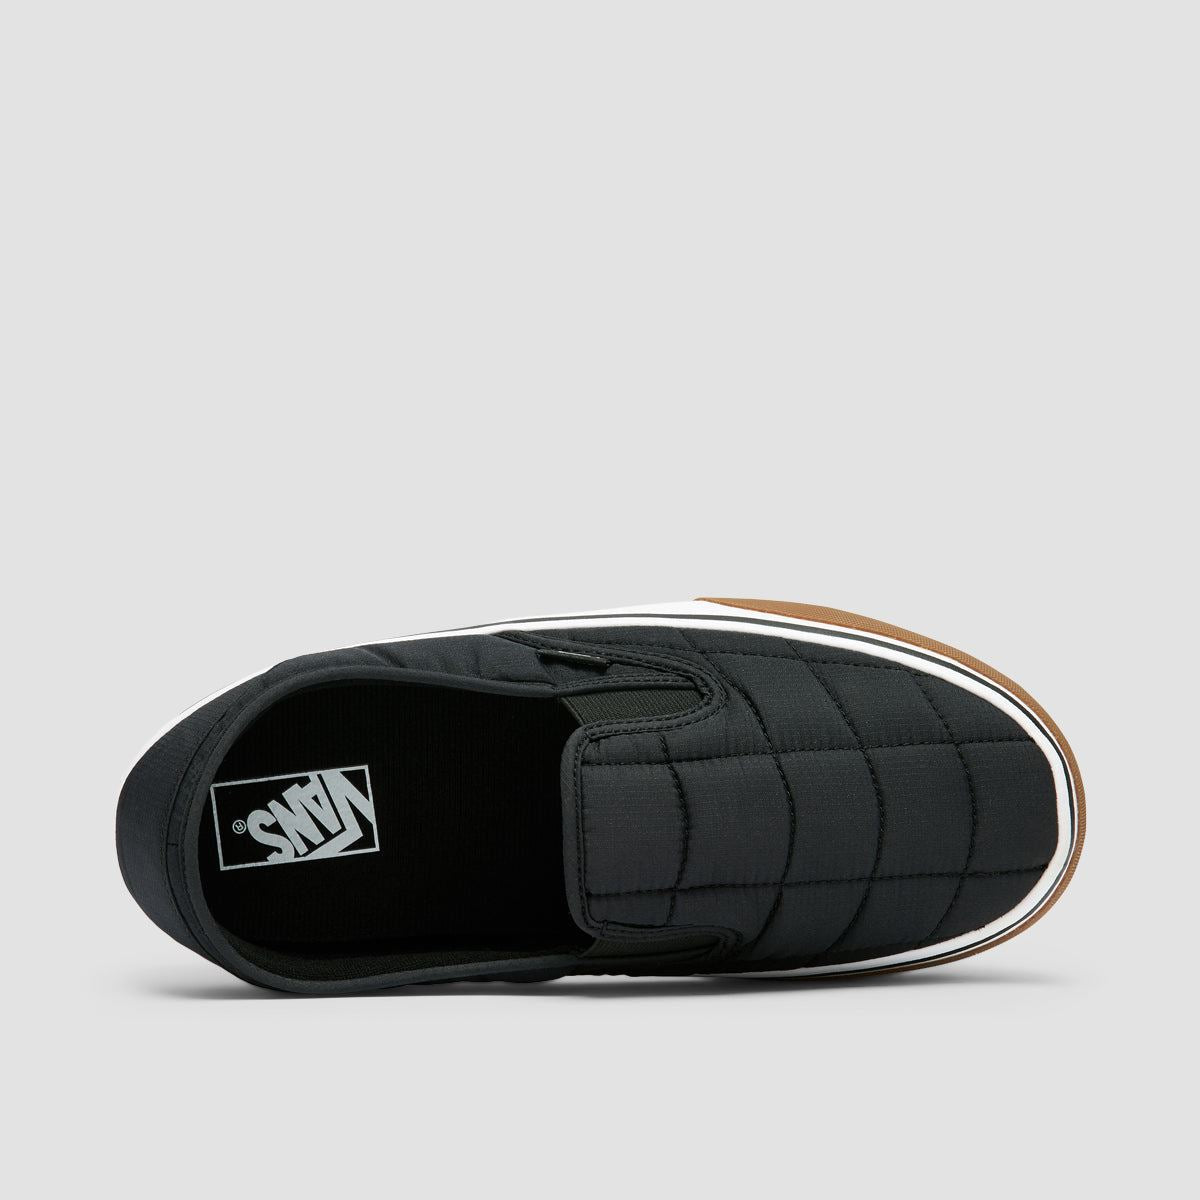 Vans Snow Lodge Slipper Vansguard Shoes - Quilted Black